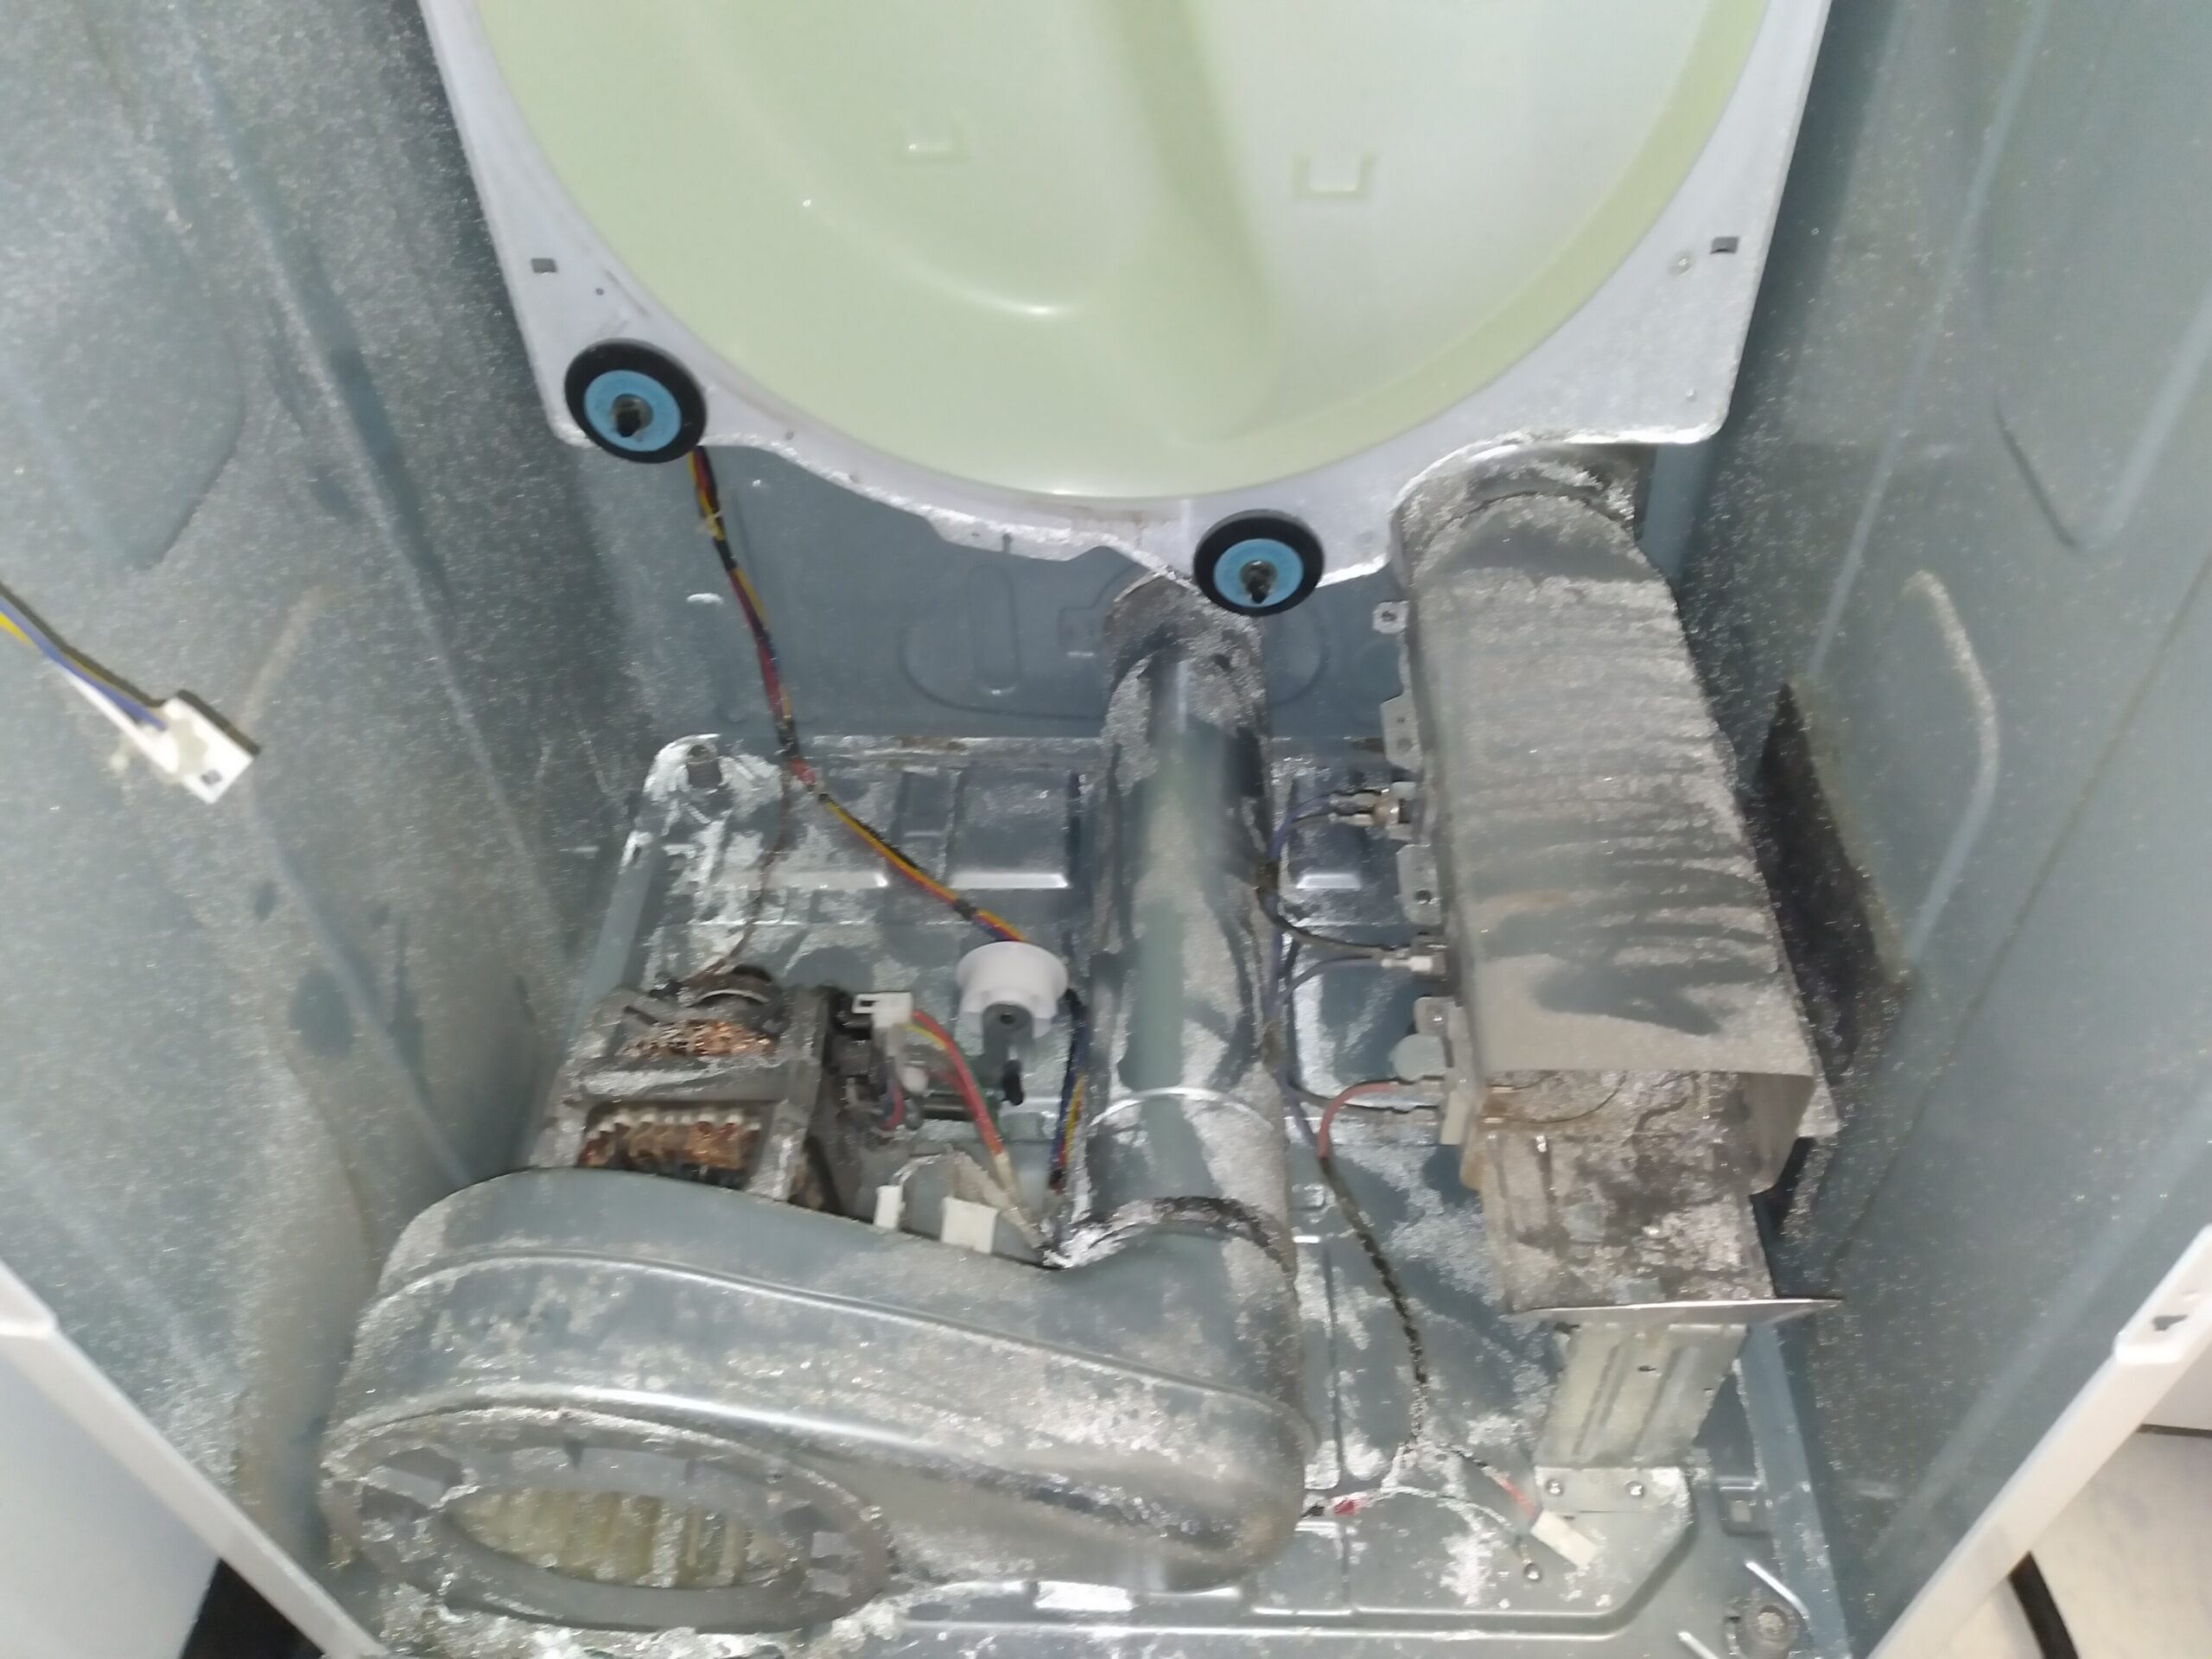 appliance repair dryer repair Installed new heating element lago bella dr lake hart orlando fl 32832